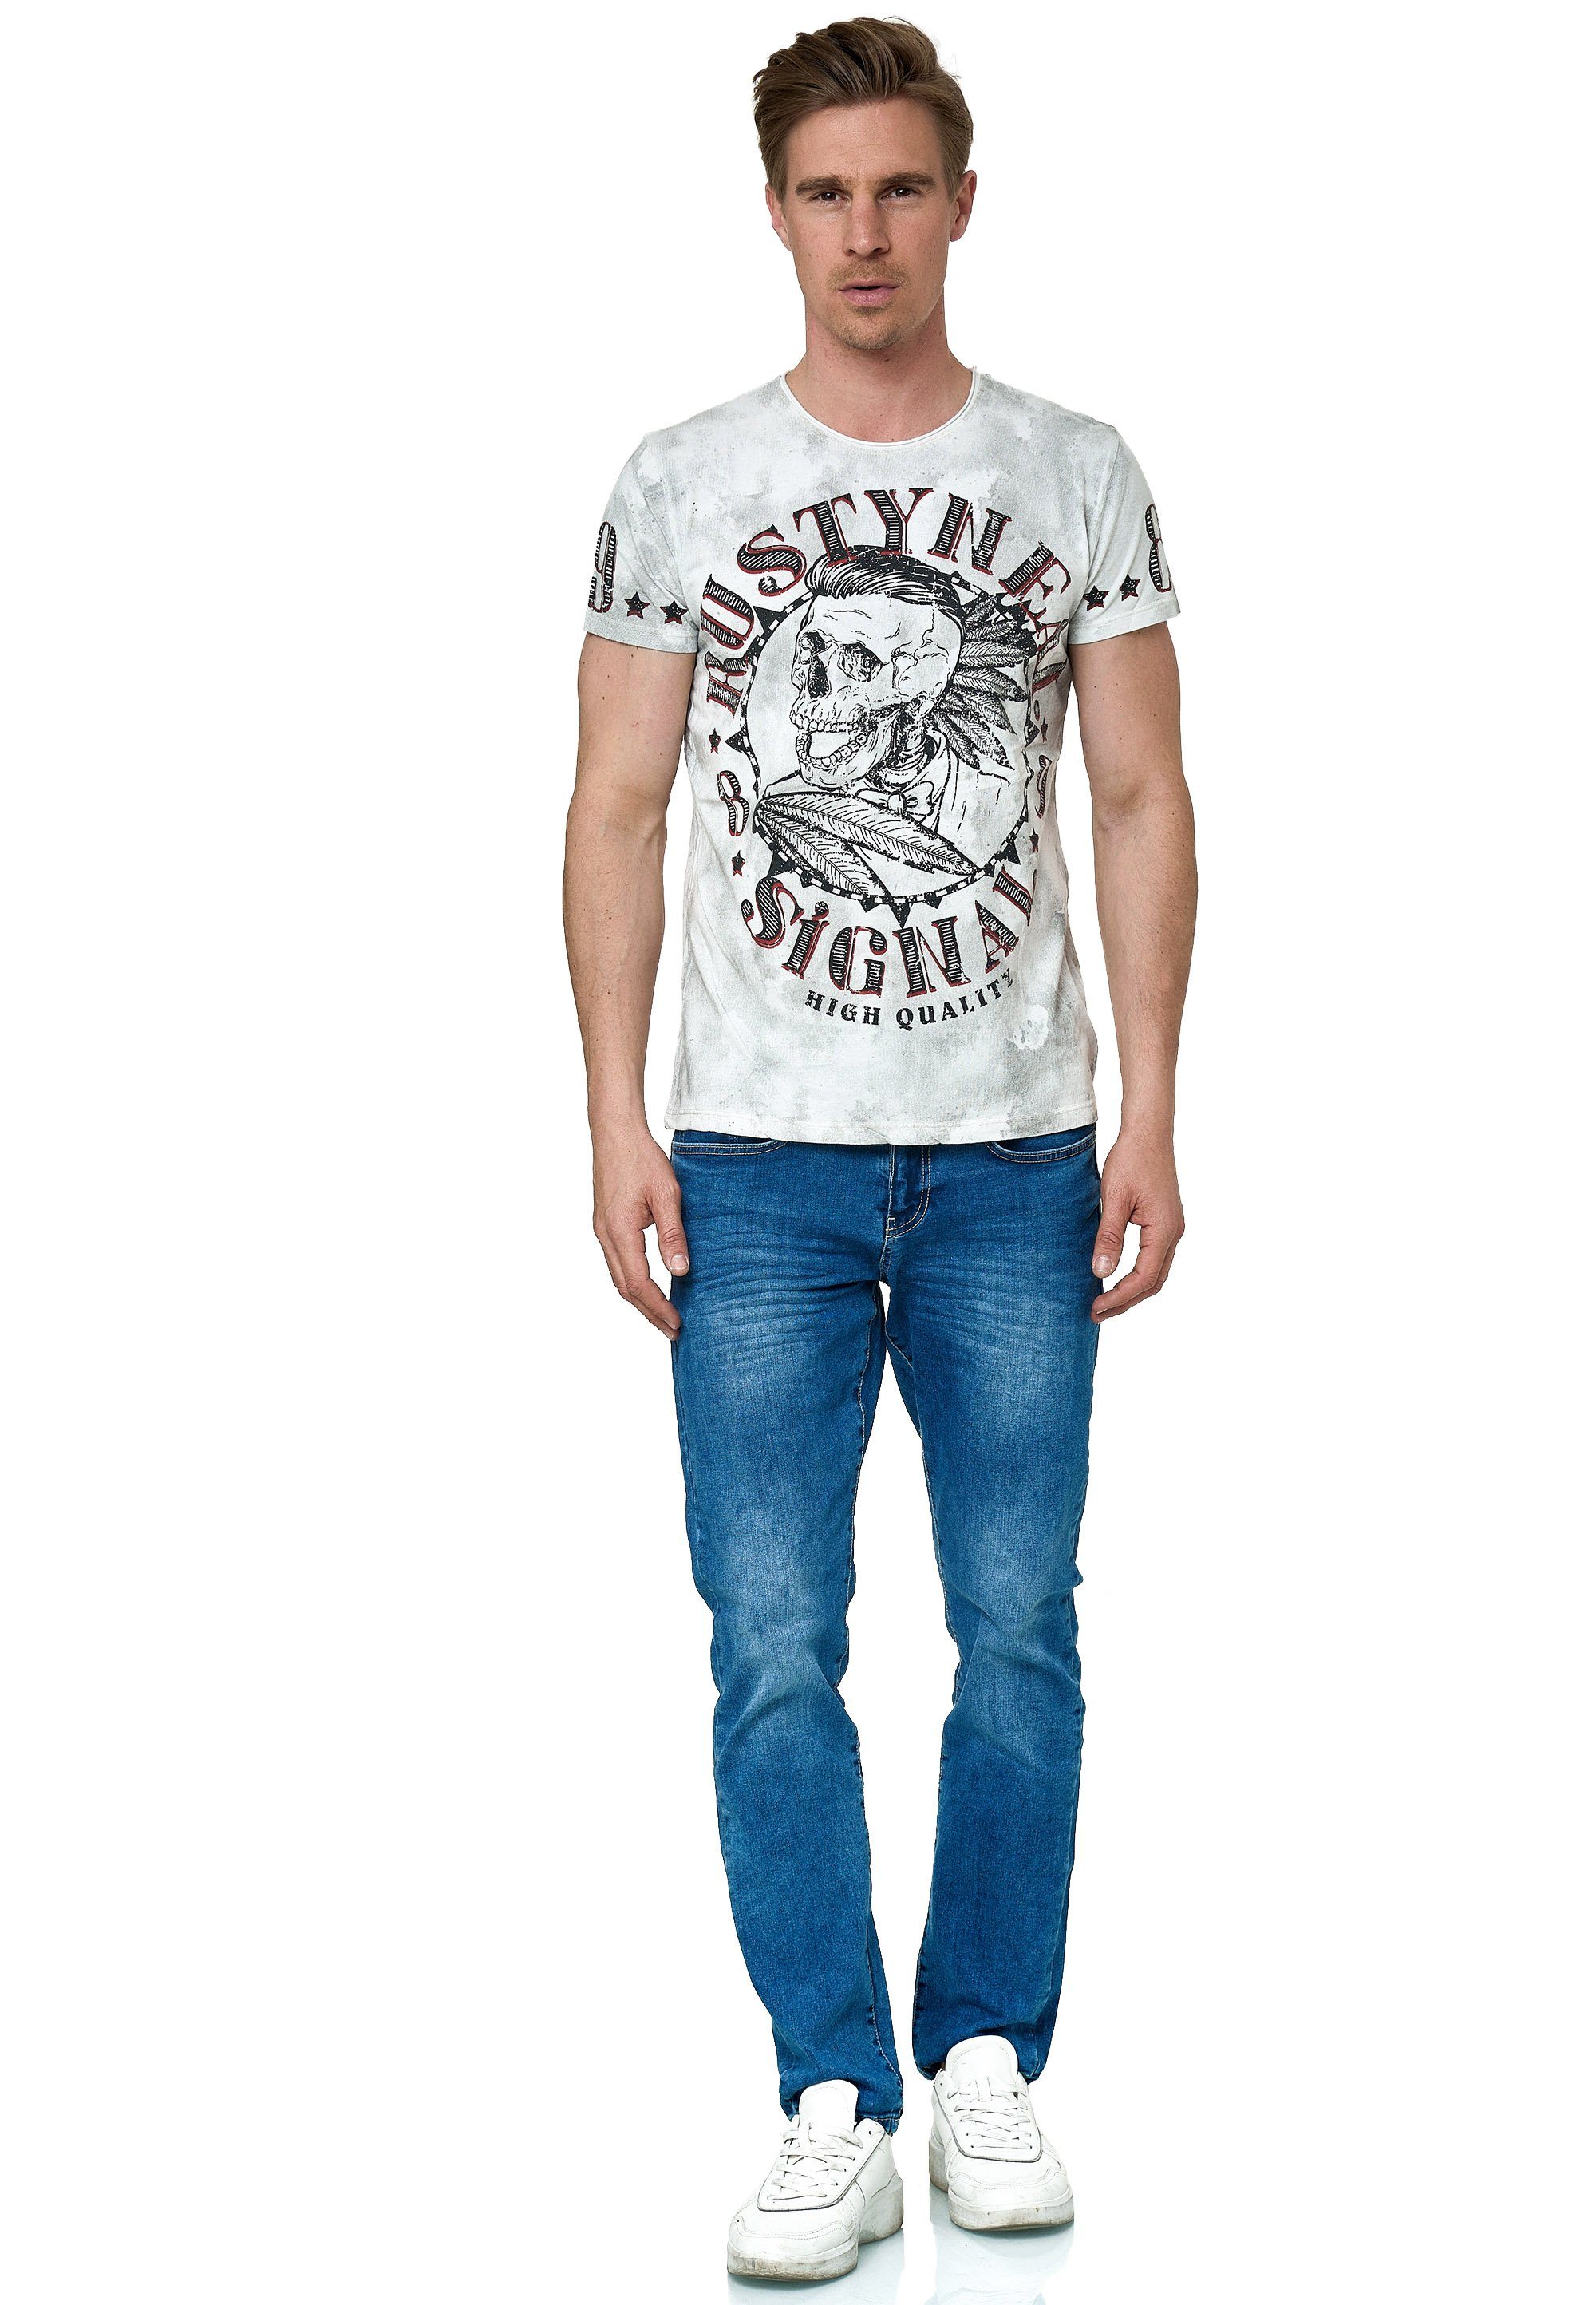 Rusty Neal T-Shirt weiß mit stylischem Totenkopf-Print